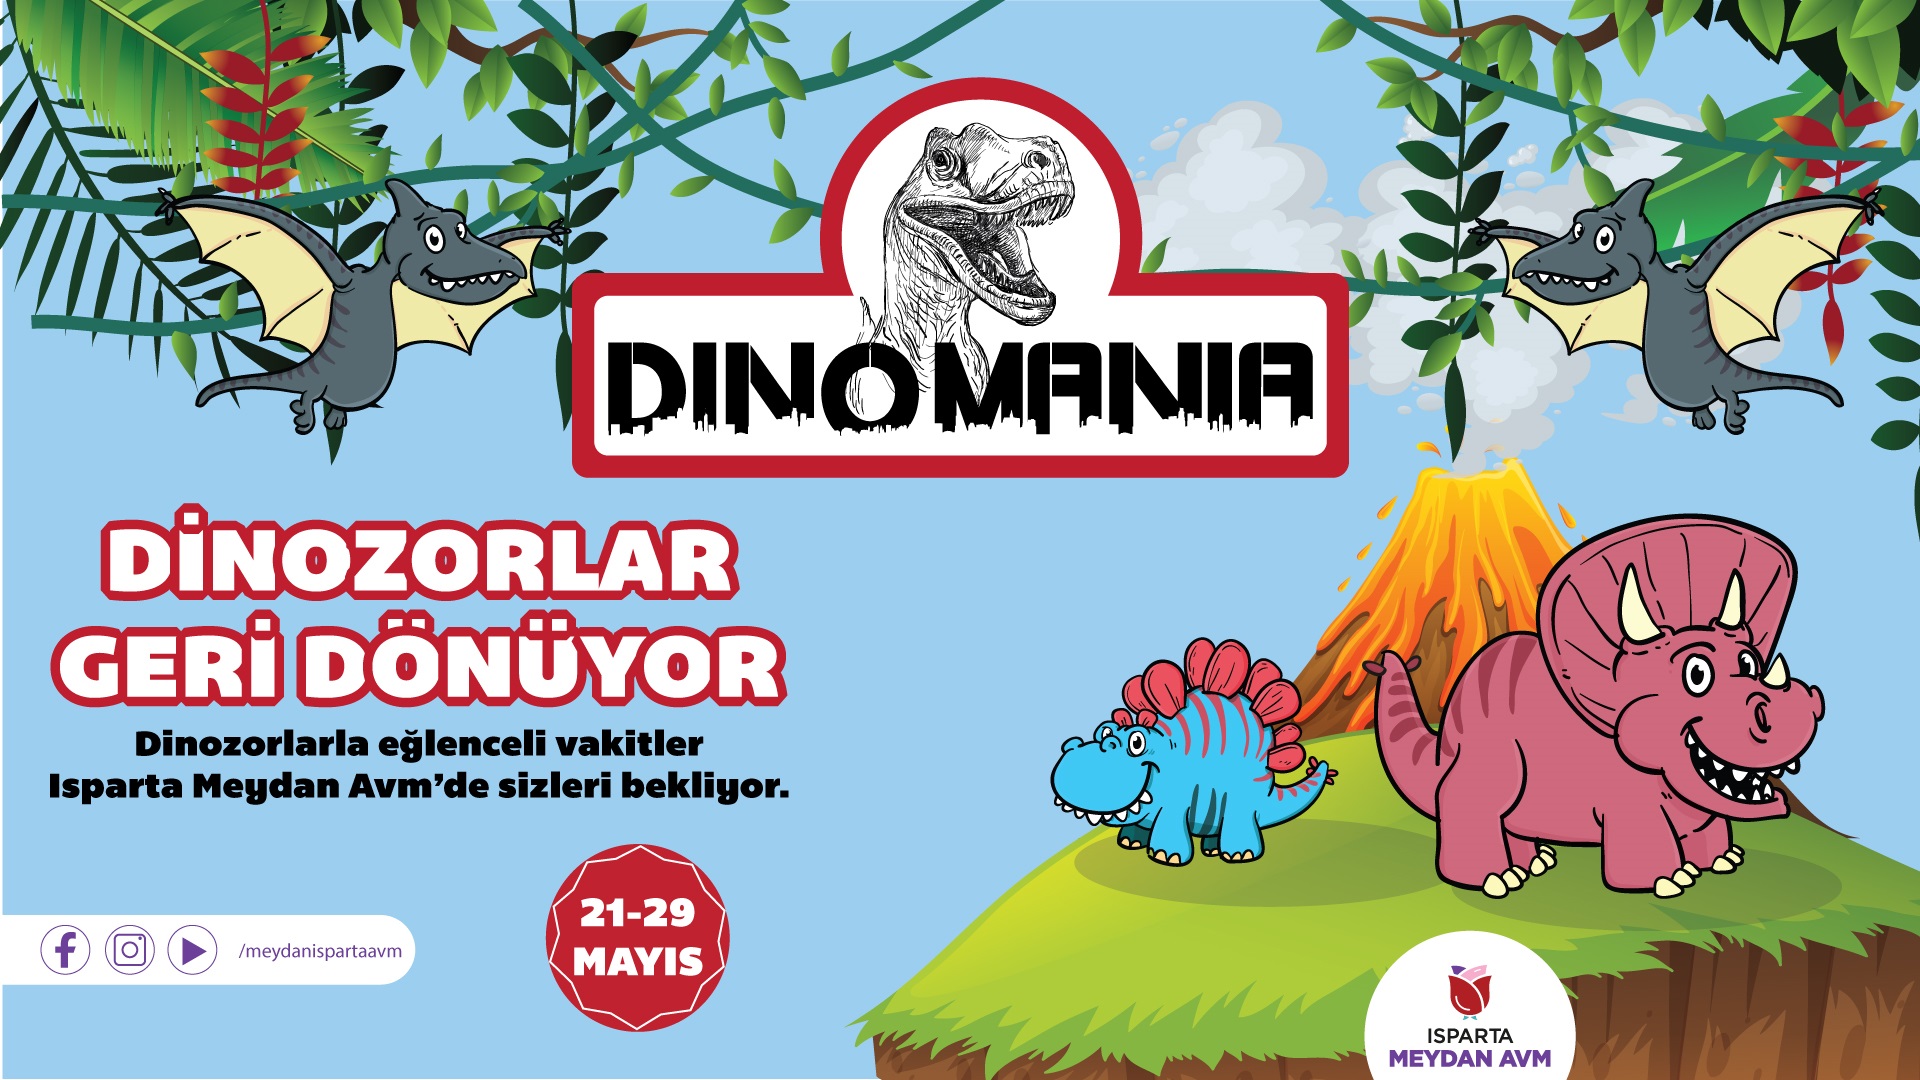 Dinomania-1920x1080-Banner (1)